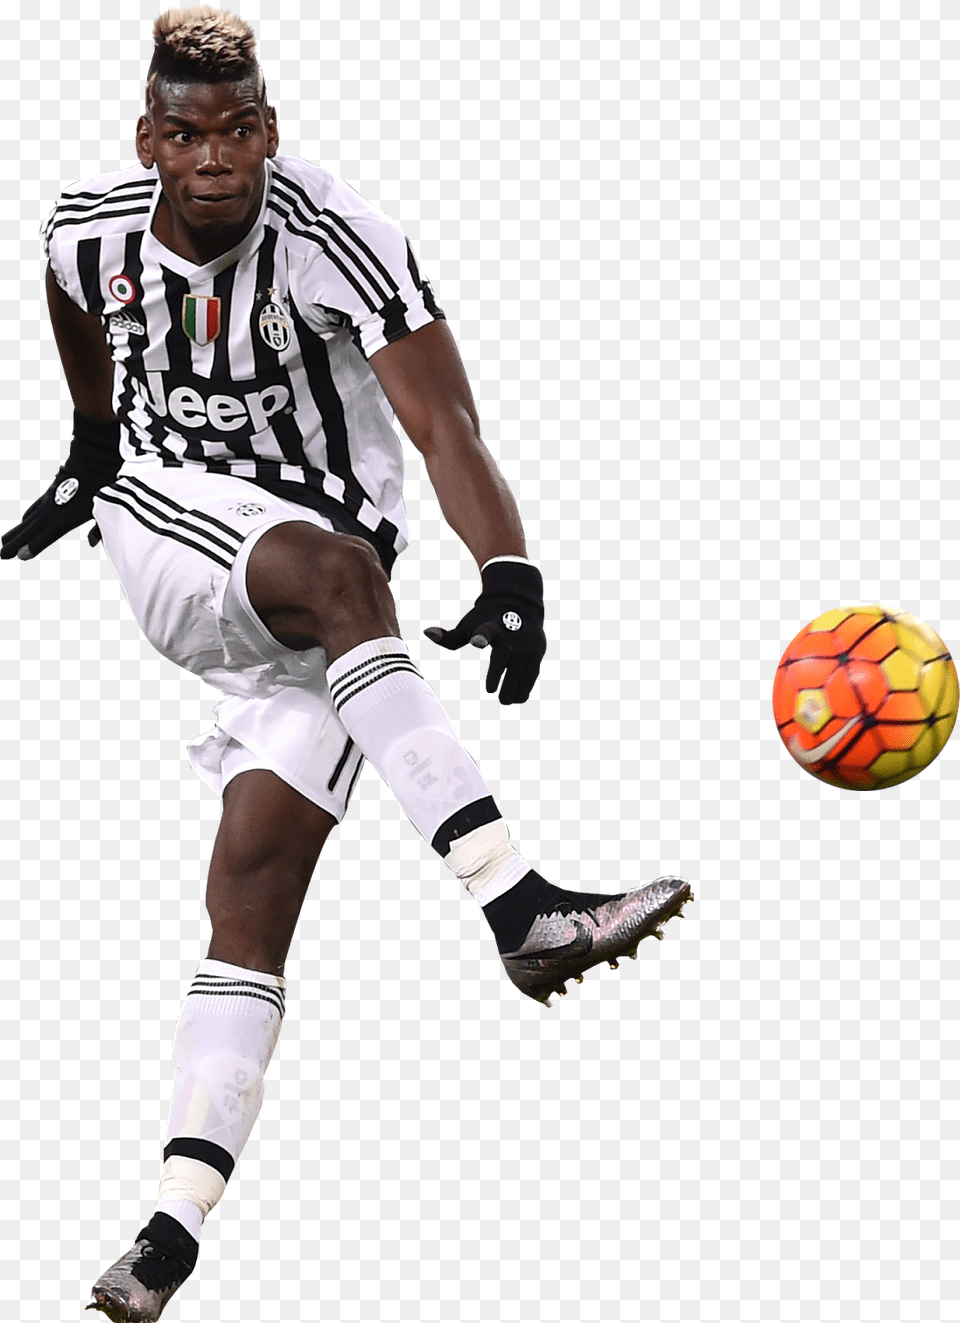 Paul Pogba Render Imagenes De Paul Pogba, Sport, Ball, Sphere, Soccer Ball Free Png